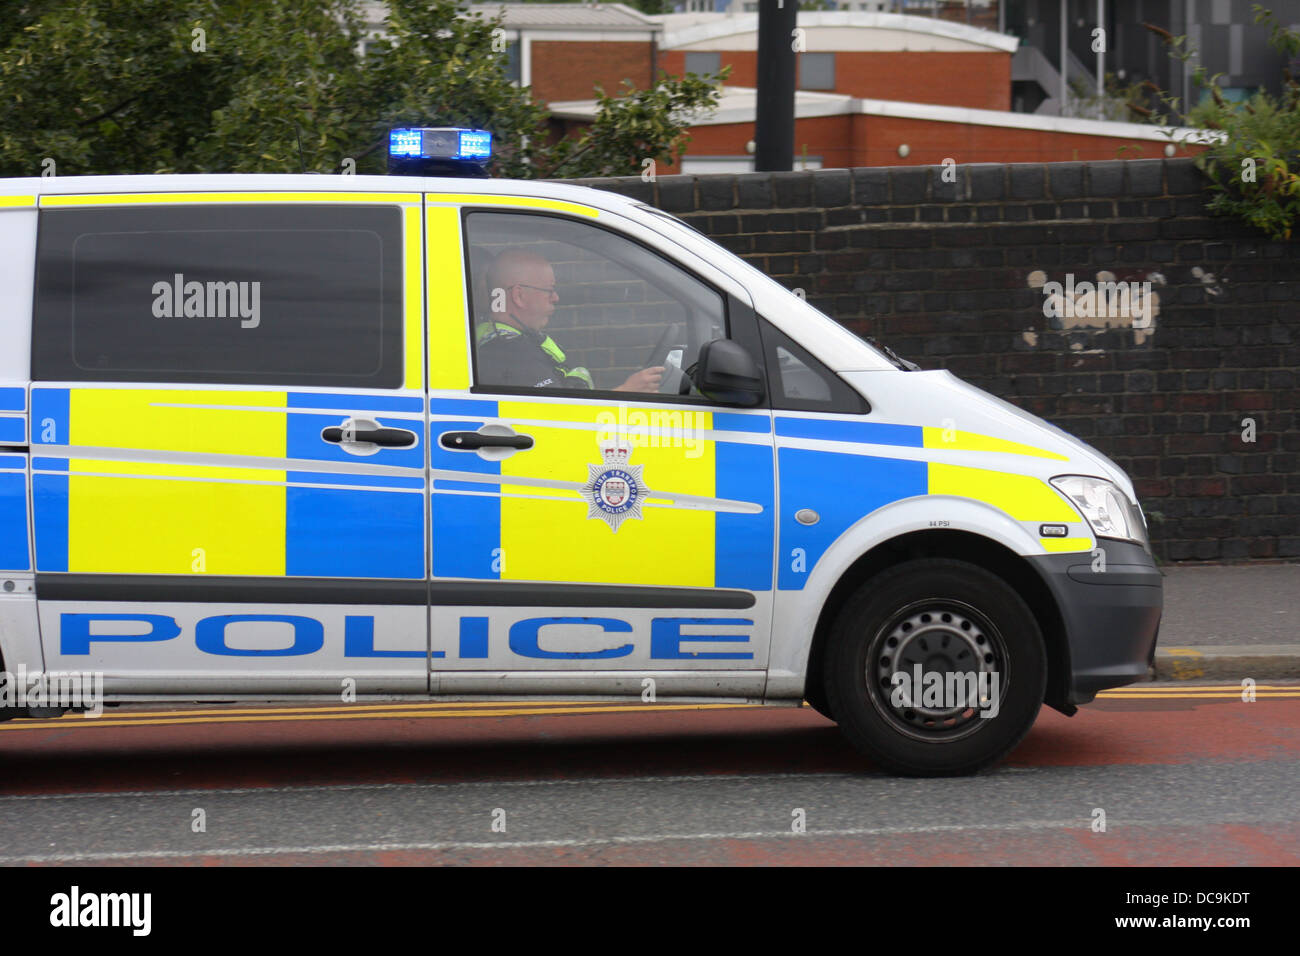 Police Van on urgent response in east London Stock Photo